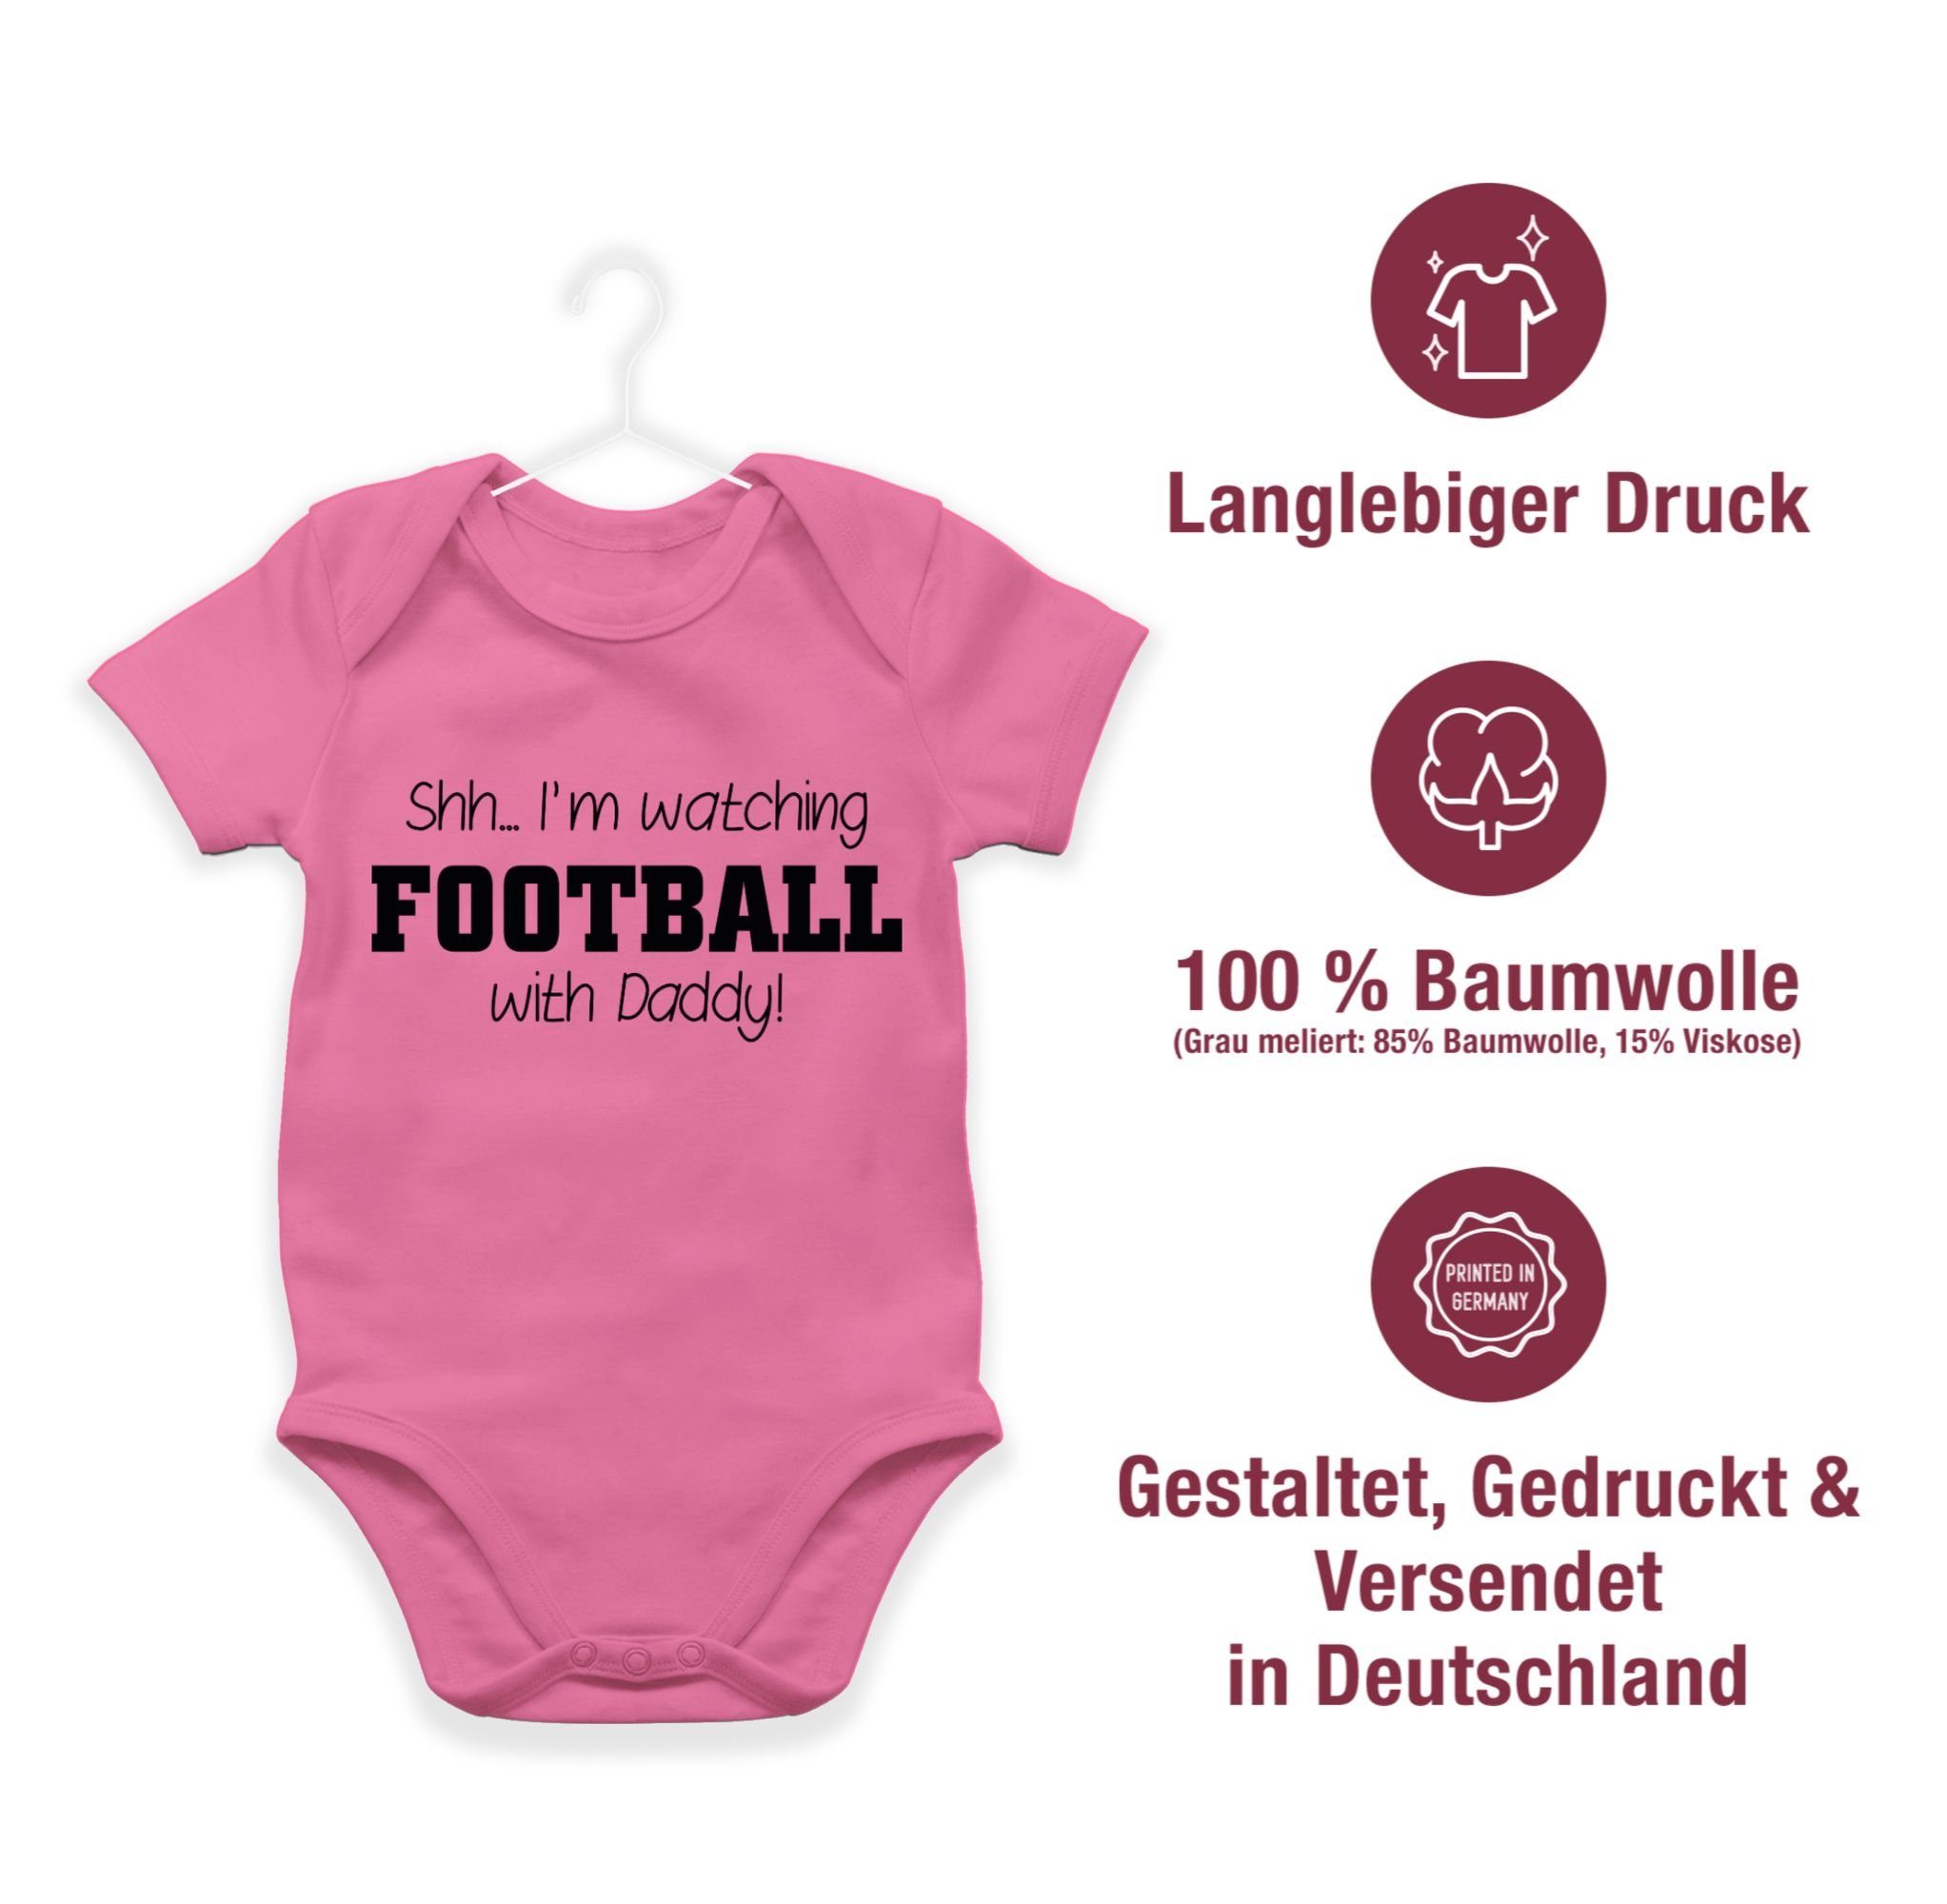 & Sport football watching with Shh...I'm 2 - Pink Shirtracer Bewegung Daddy! Baby Shirtbody schwarz